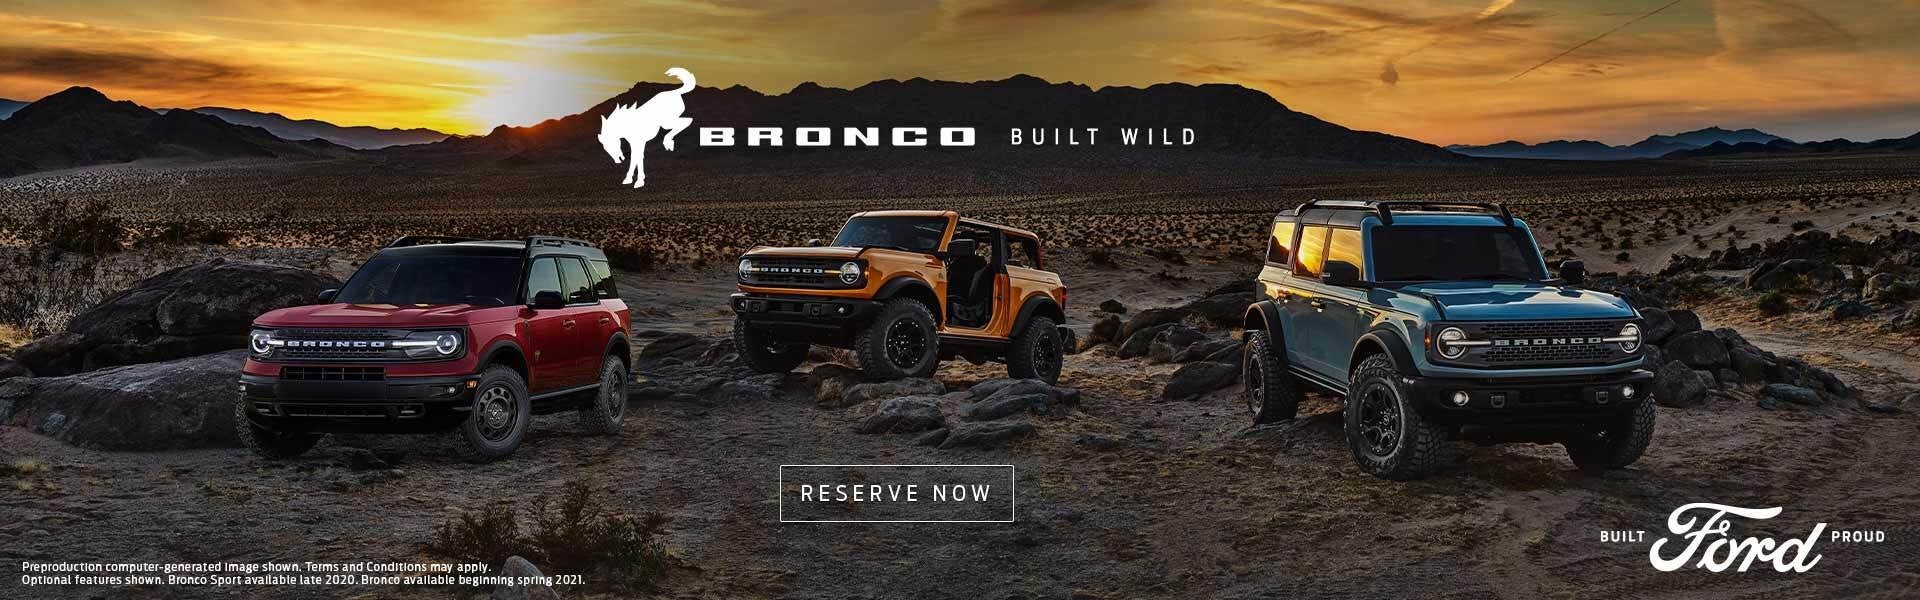 Bronco Built Wild